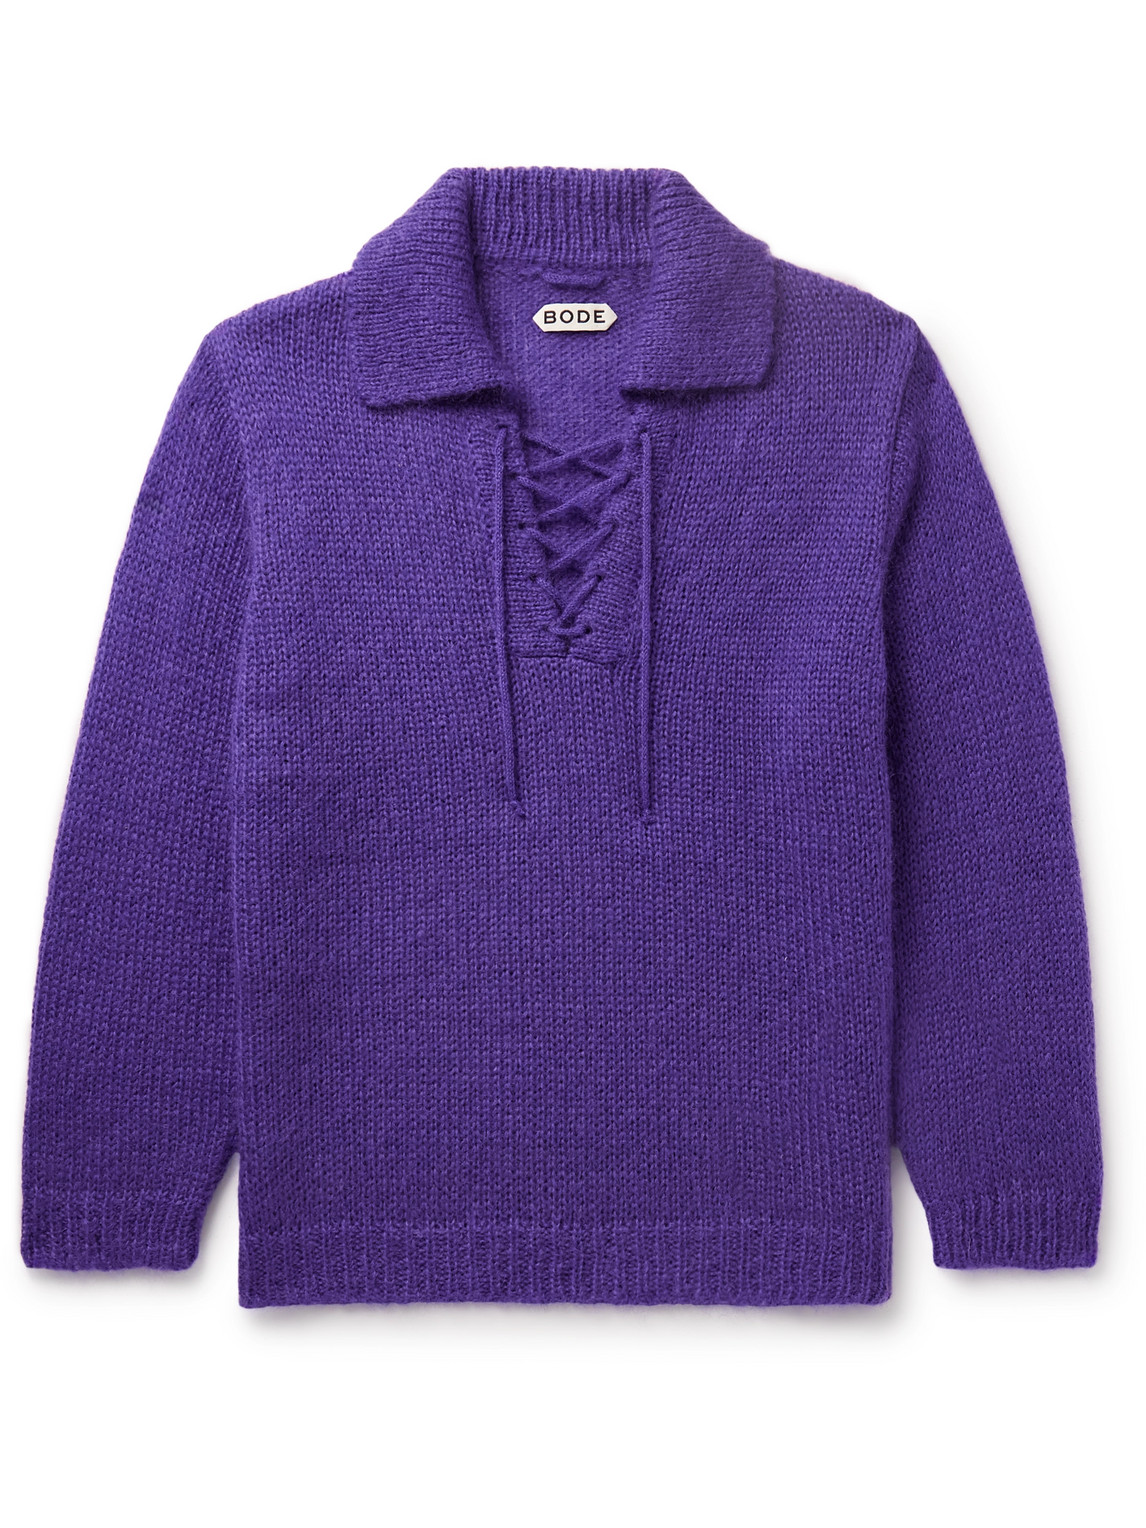 Bode Alpine Pullover Jumper In Purple